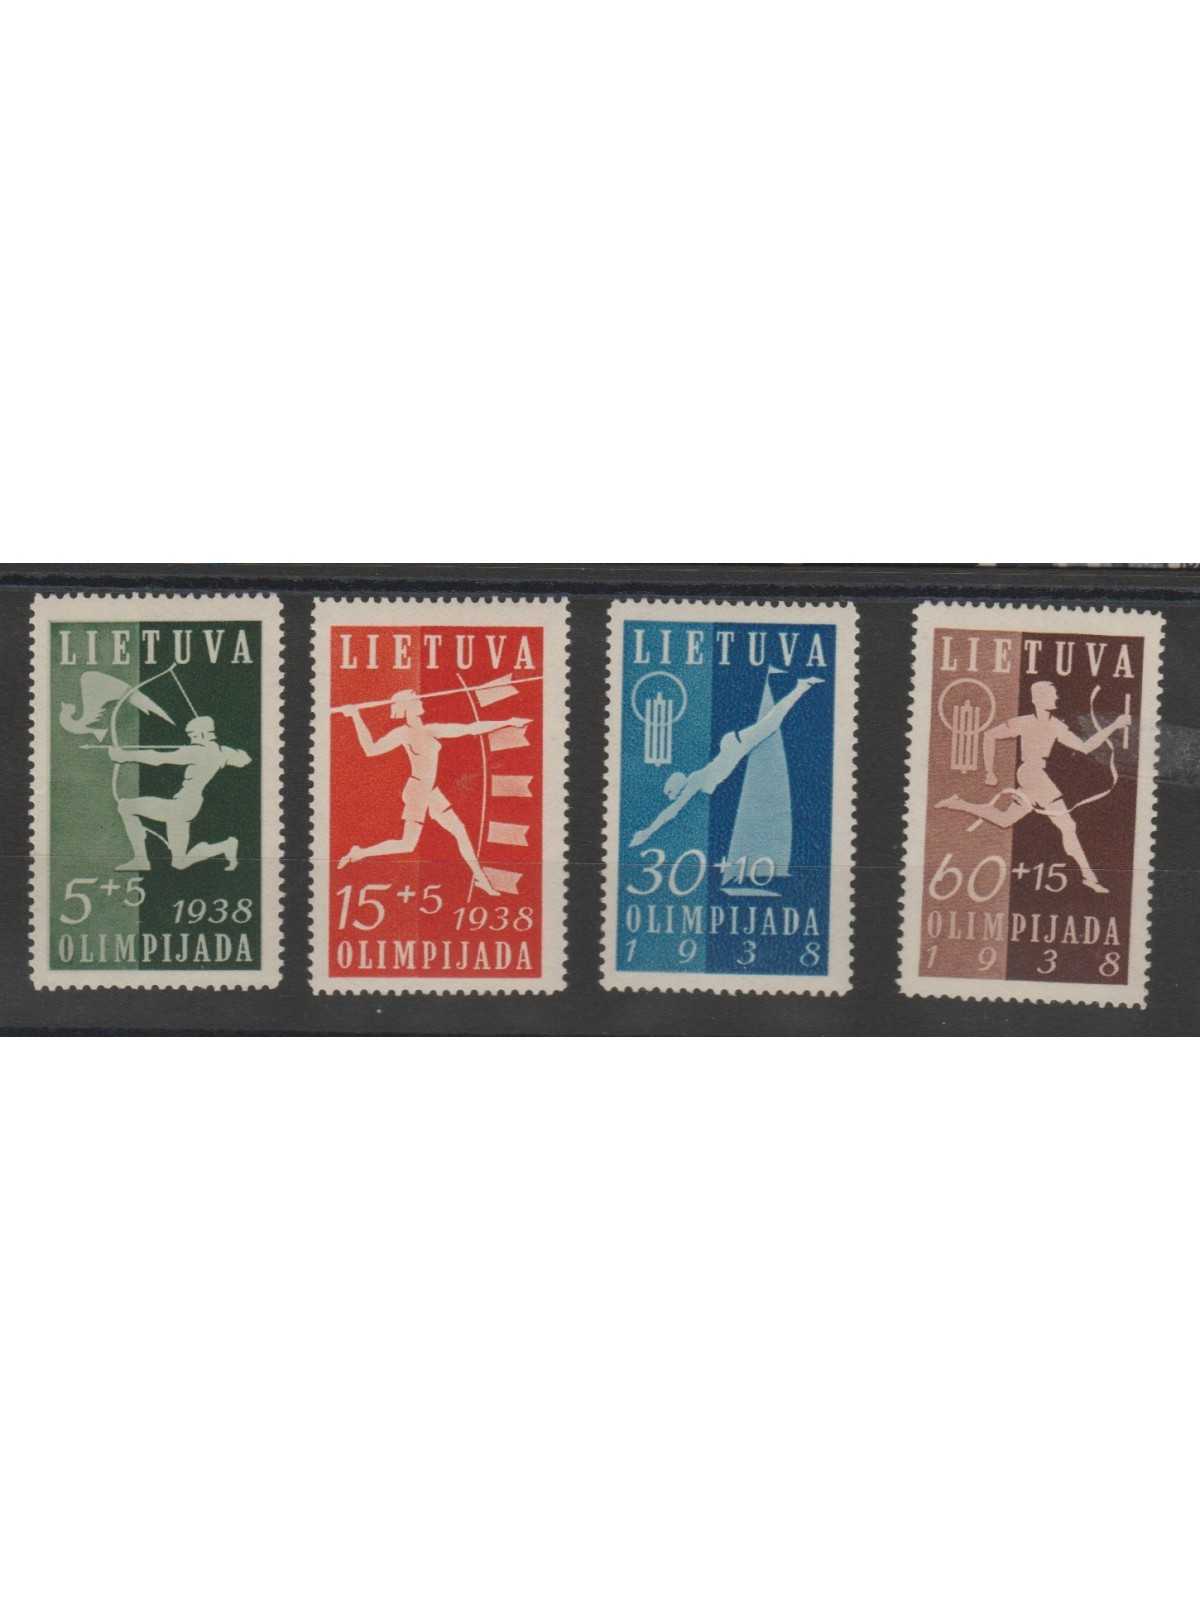 1938 LITUANIA LIETUVA OLIMPIADI LITUANA 4 VAL MLH MF51571